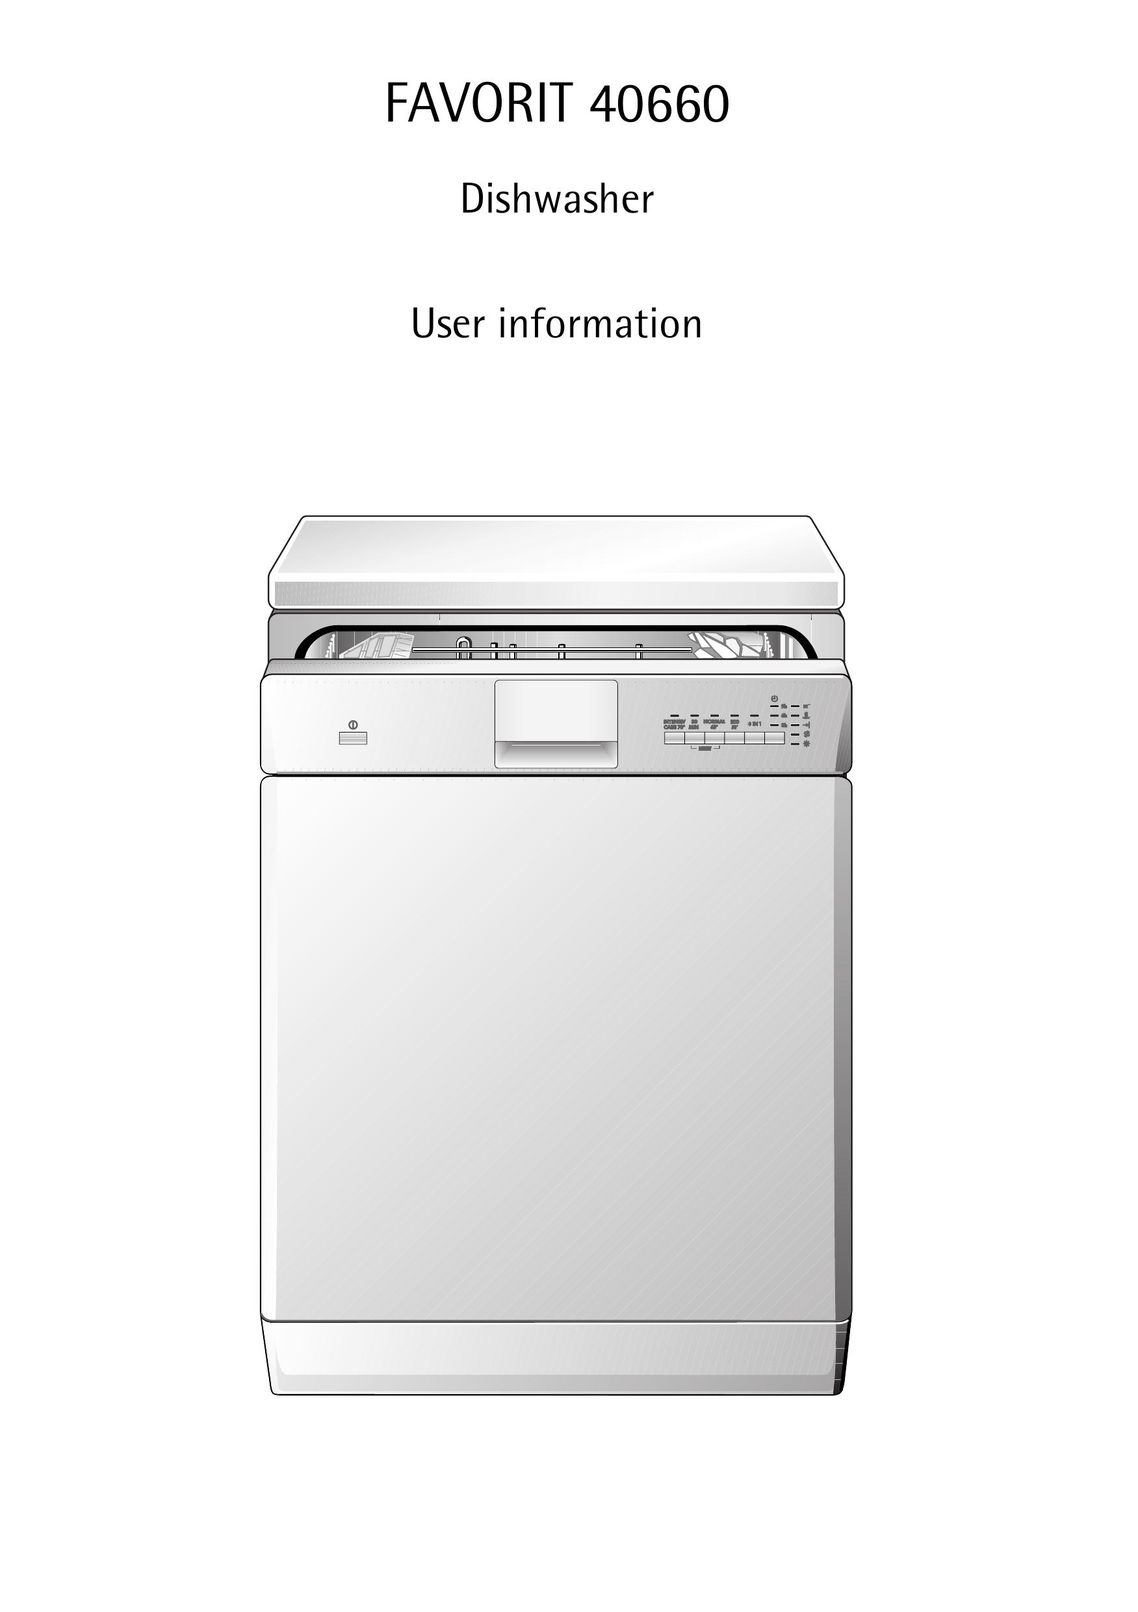 AEG 40660 Dishwasher User Manual